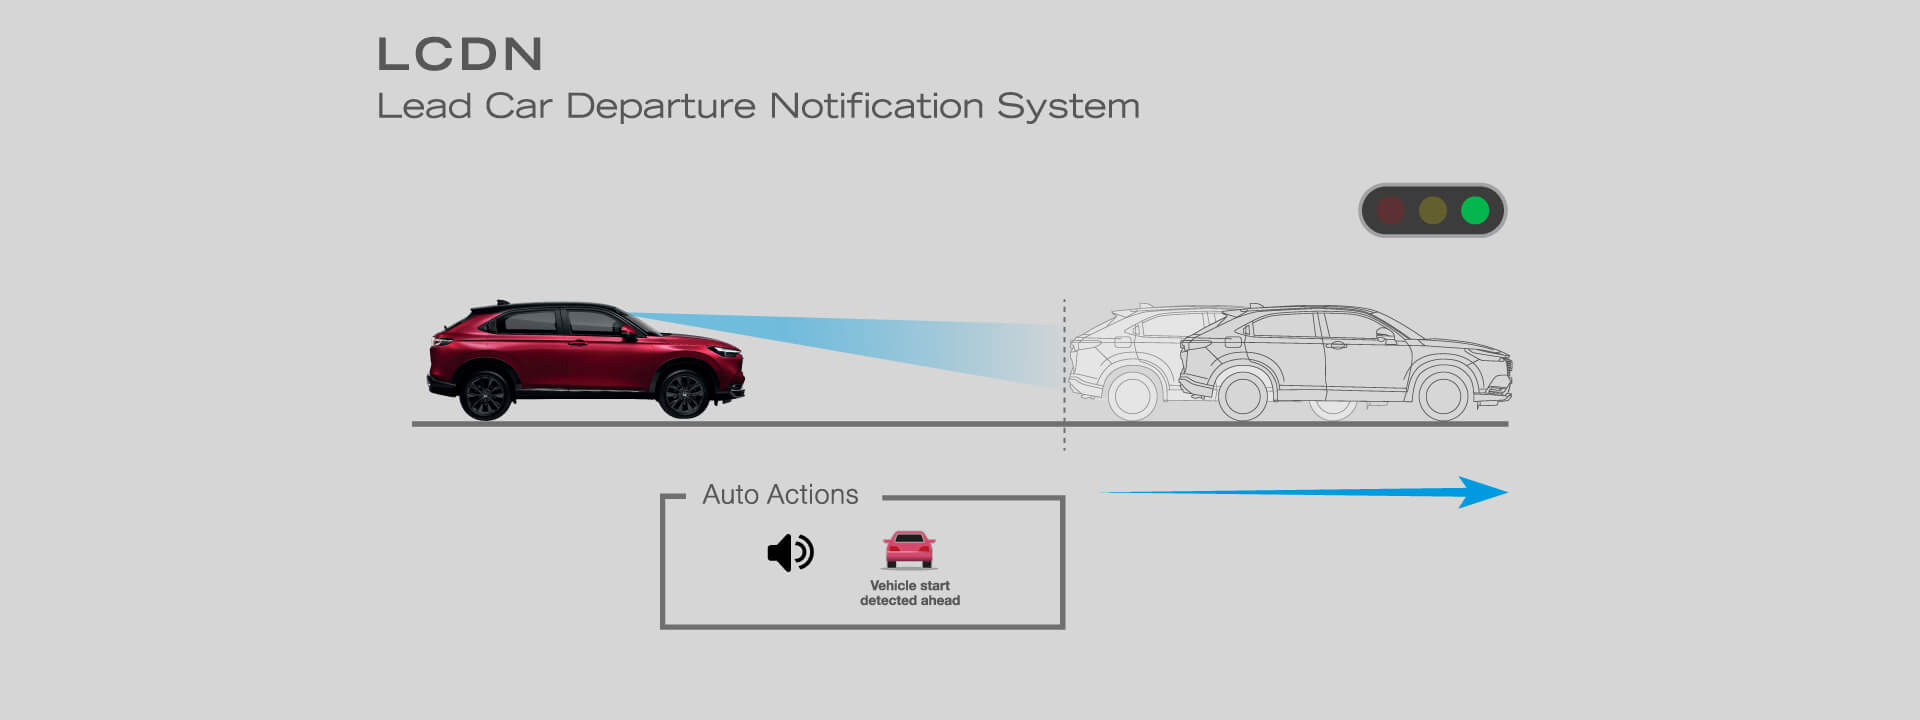 Lead Car Departure Notification System (LCDN) ระบบเตือนเมื่อรถคันหน้าเคลื่อนที่